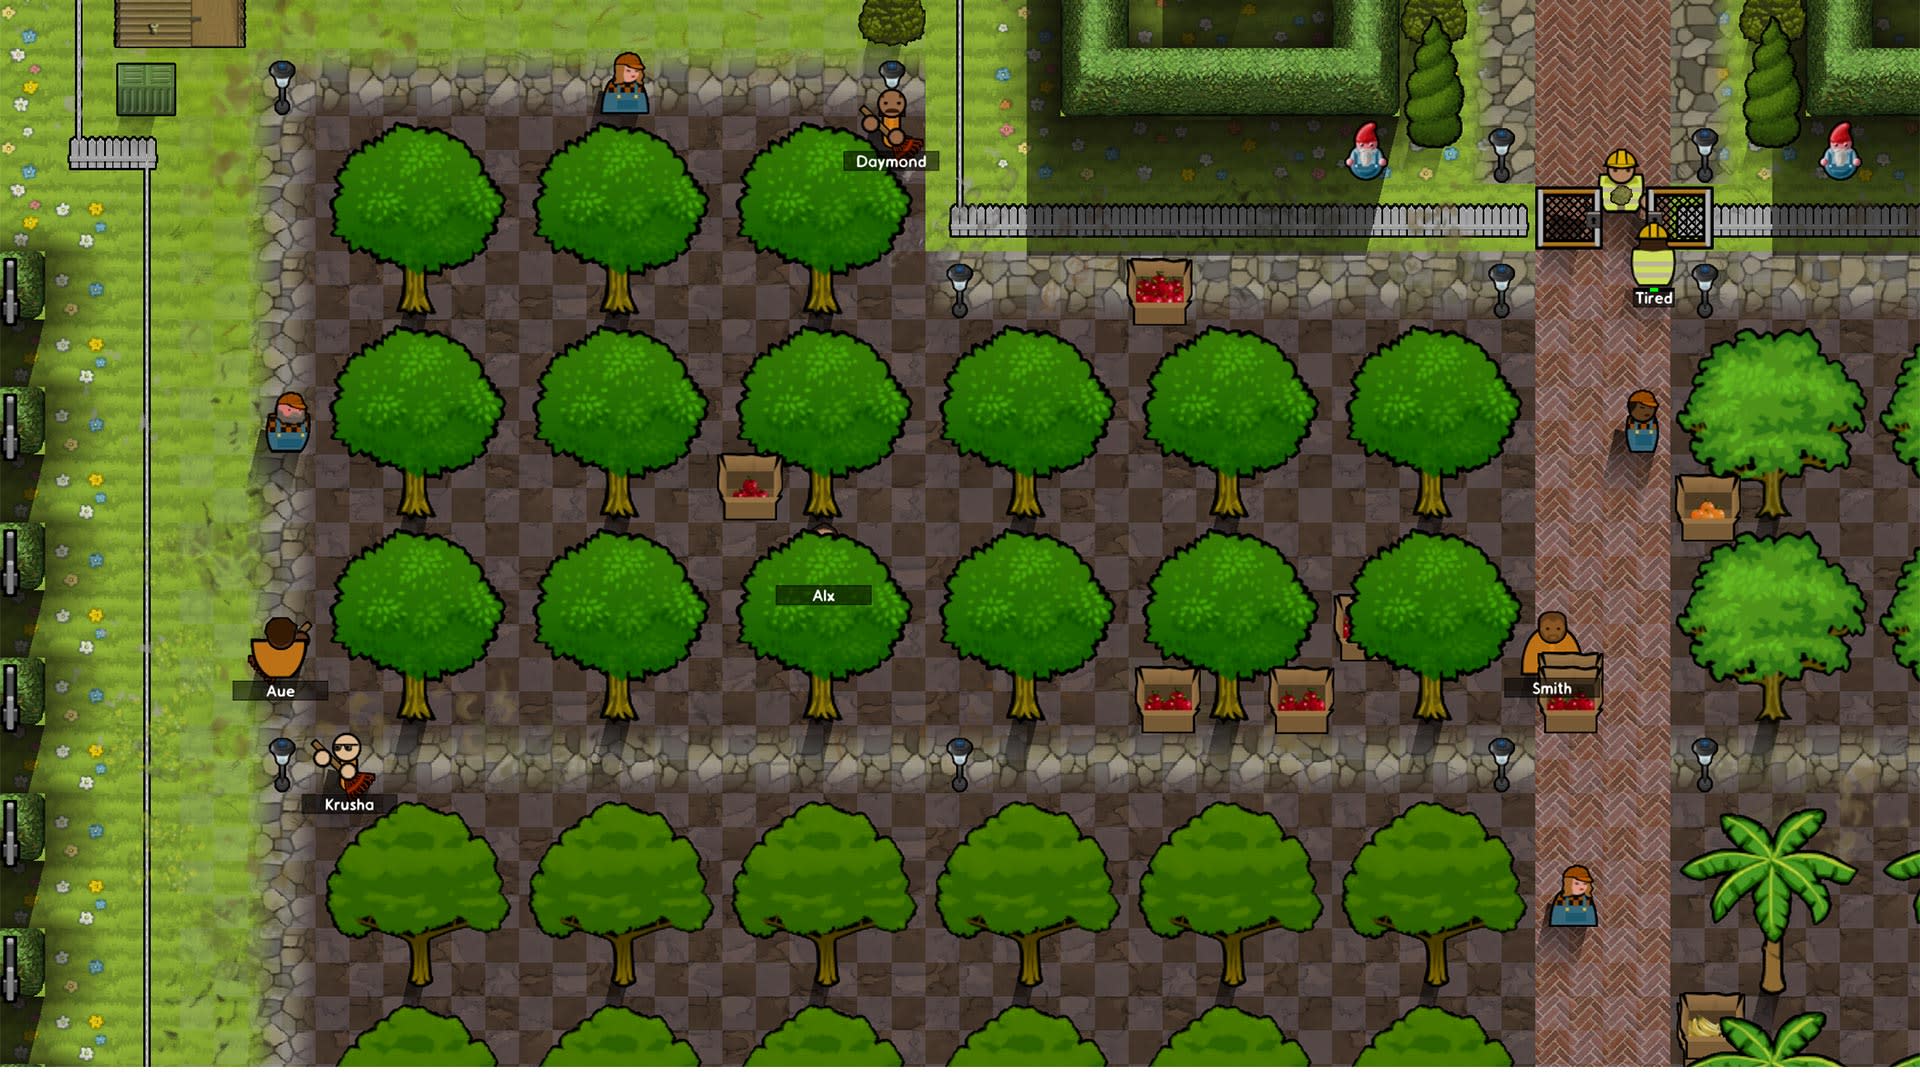 Prison Architect - Going Green (screenshot 5)